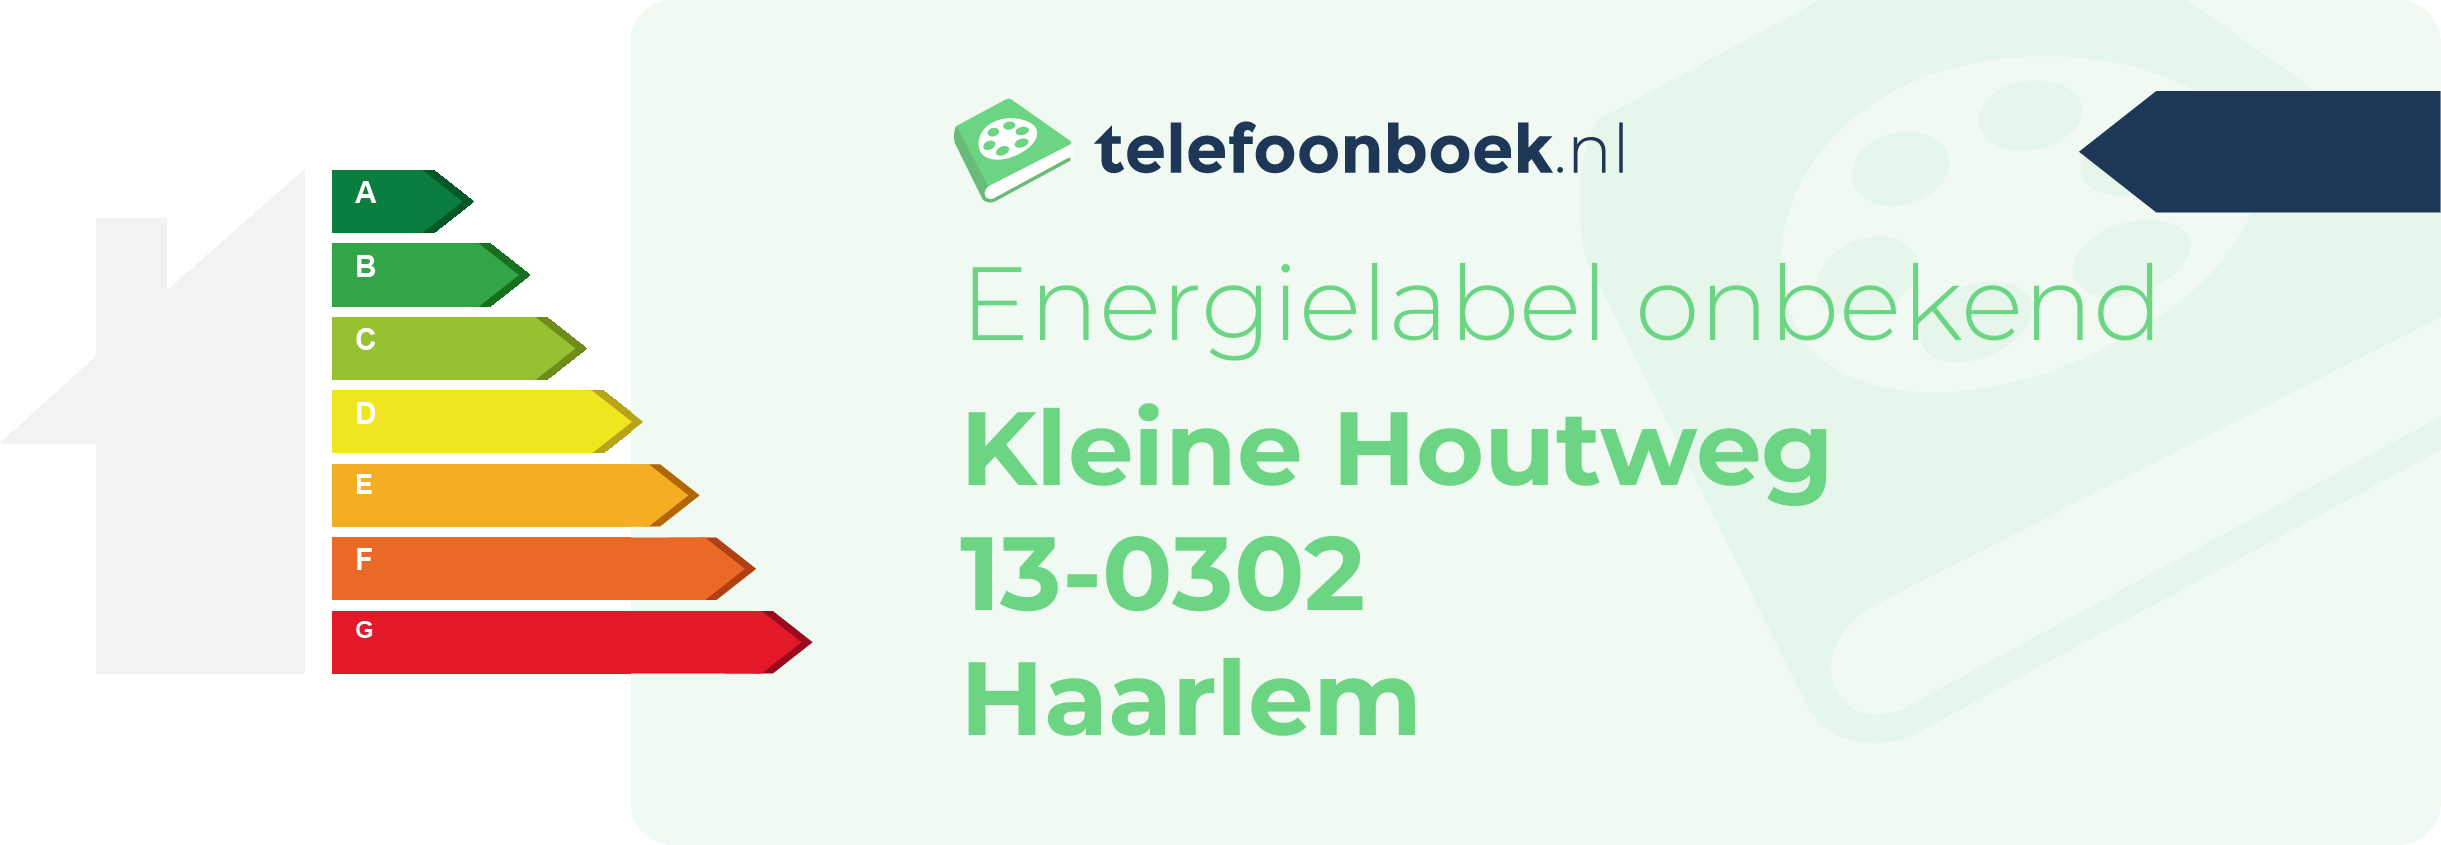 Energielabel Kleine Houtweg 13-0302 Haarlem